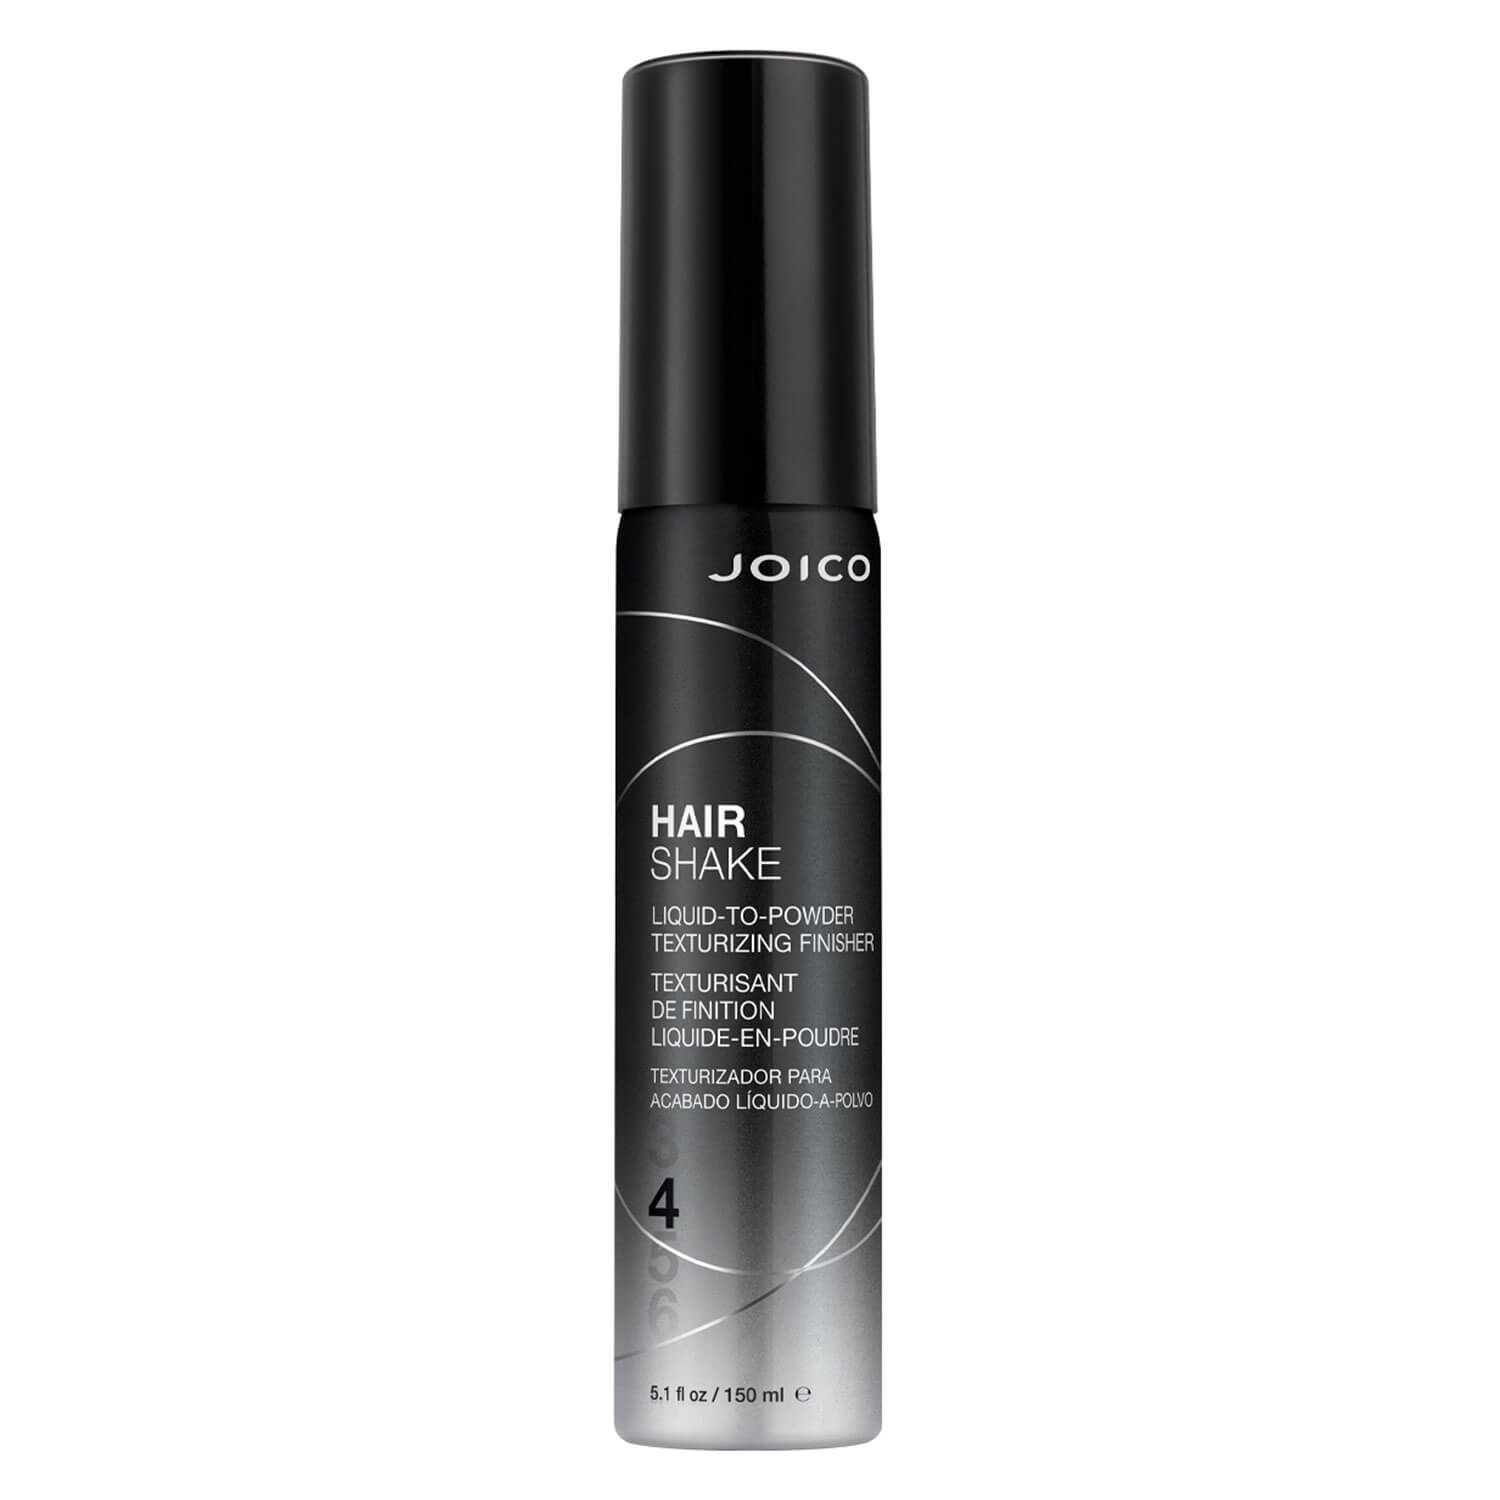 Produktbild von Joico Style & Finish - Hair Shake Liquid-To-Powder Texturizing Finisher